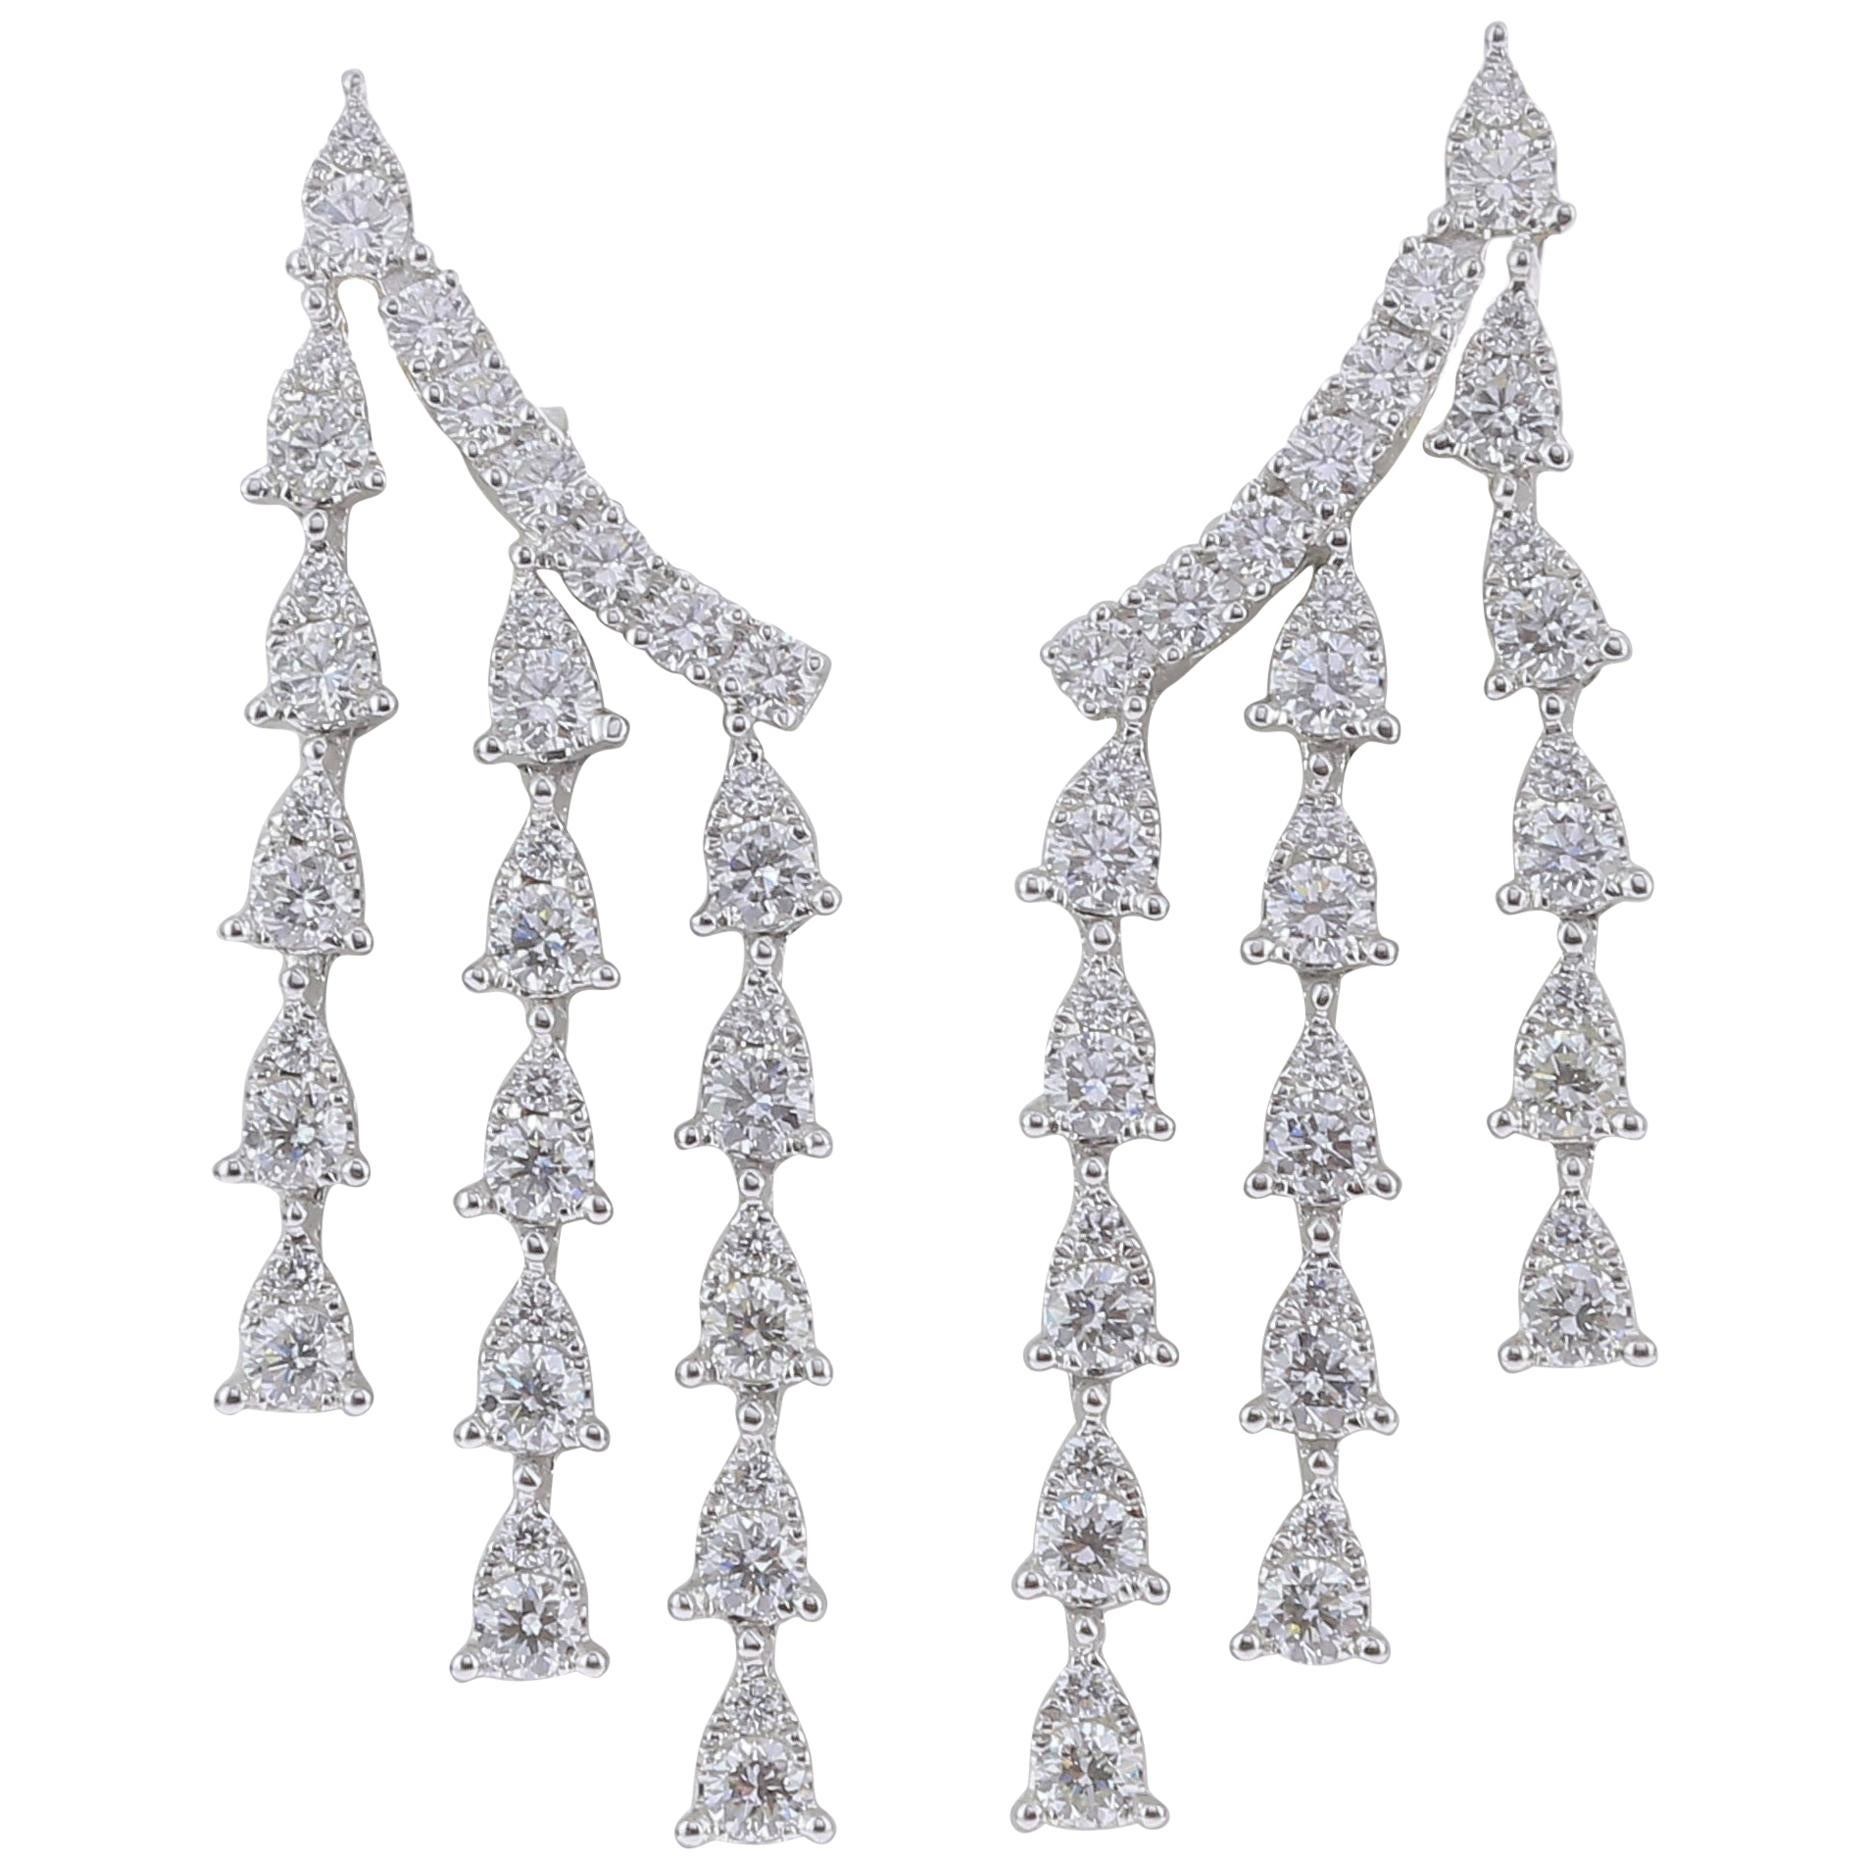 2.28 Carat Pear Shape Diamond Fall Earrings White Gold Diamonds Dangle Earrings